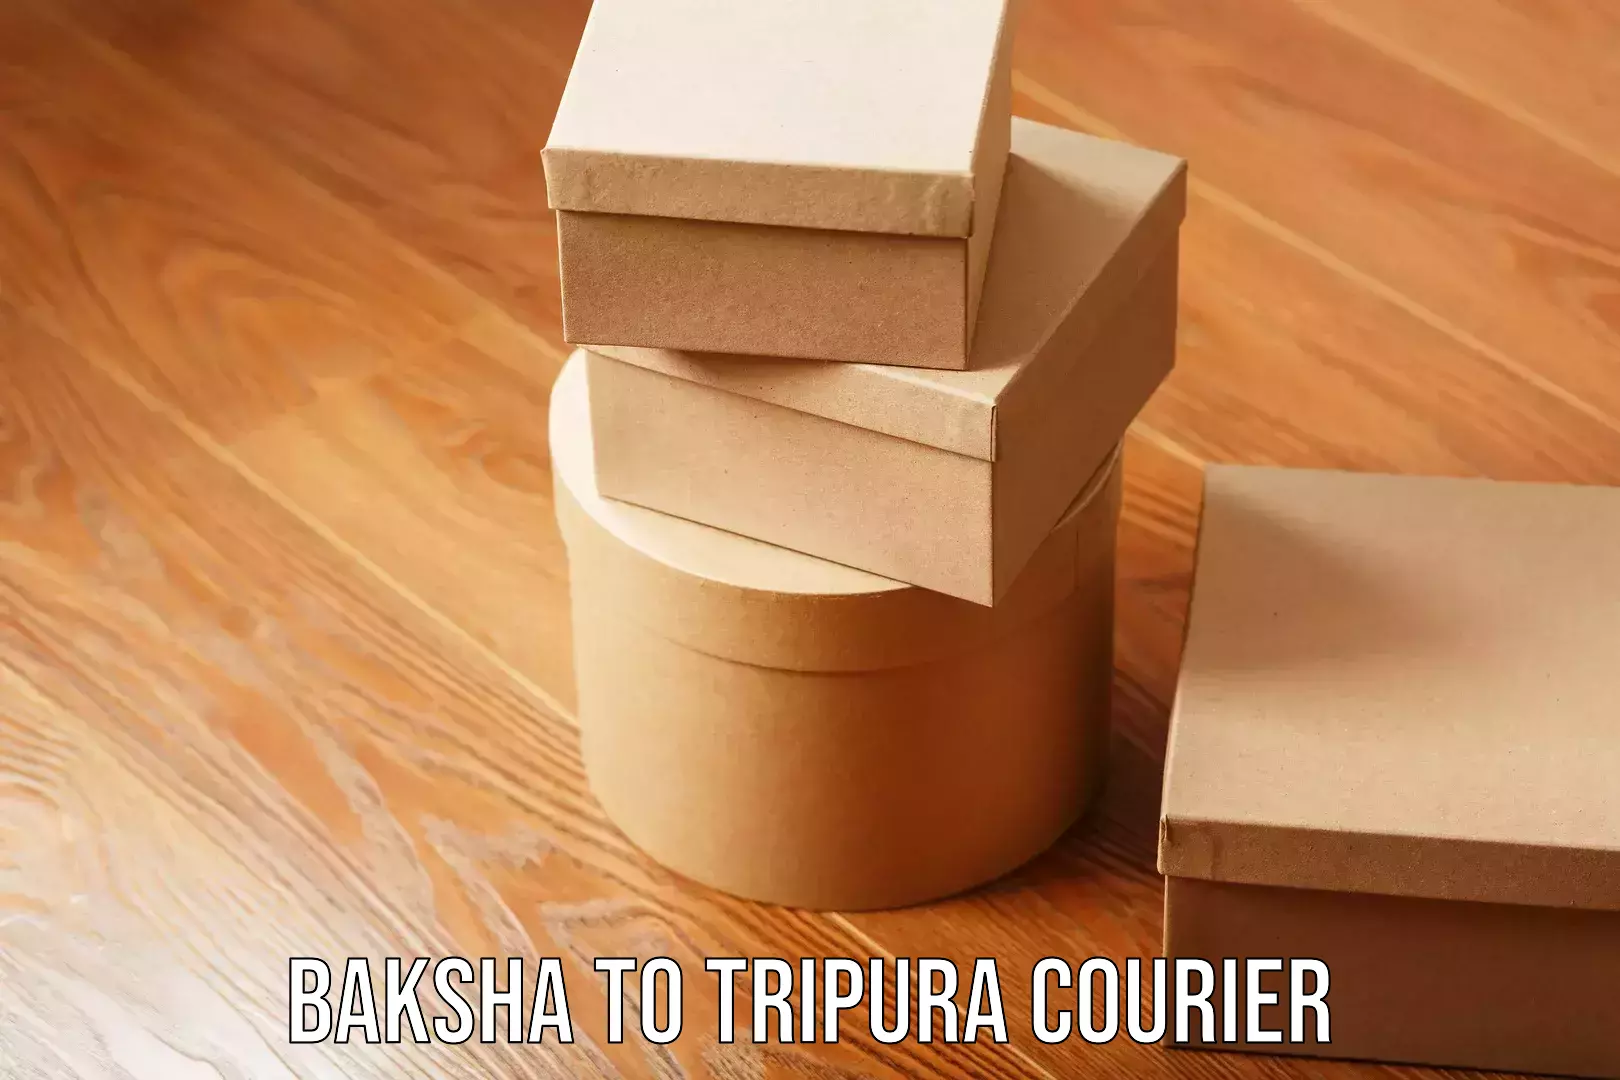 Courier service partnerships Baksha to Tripura